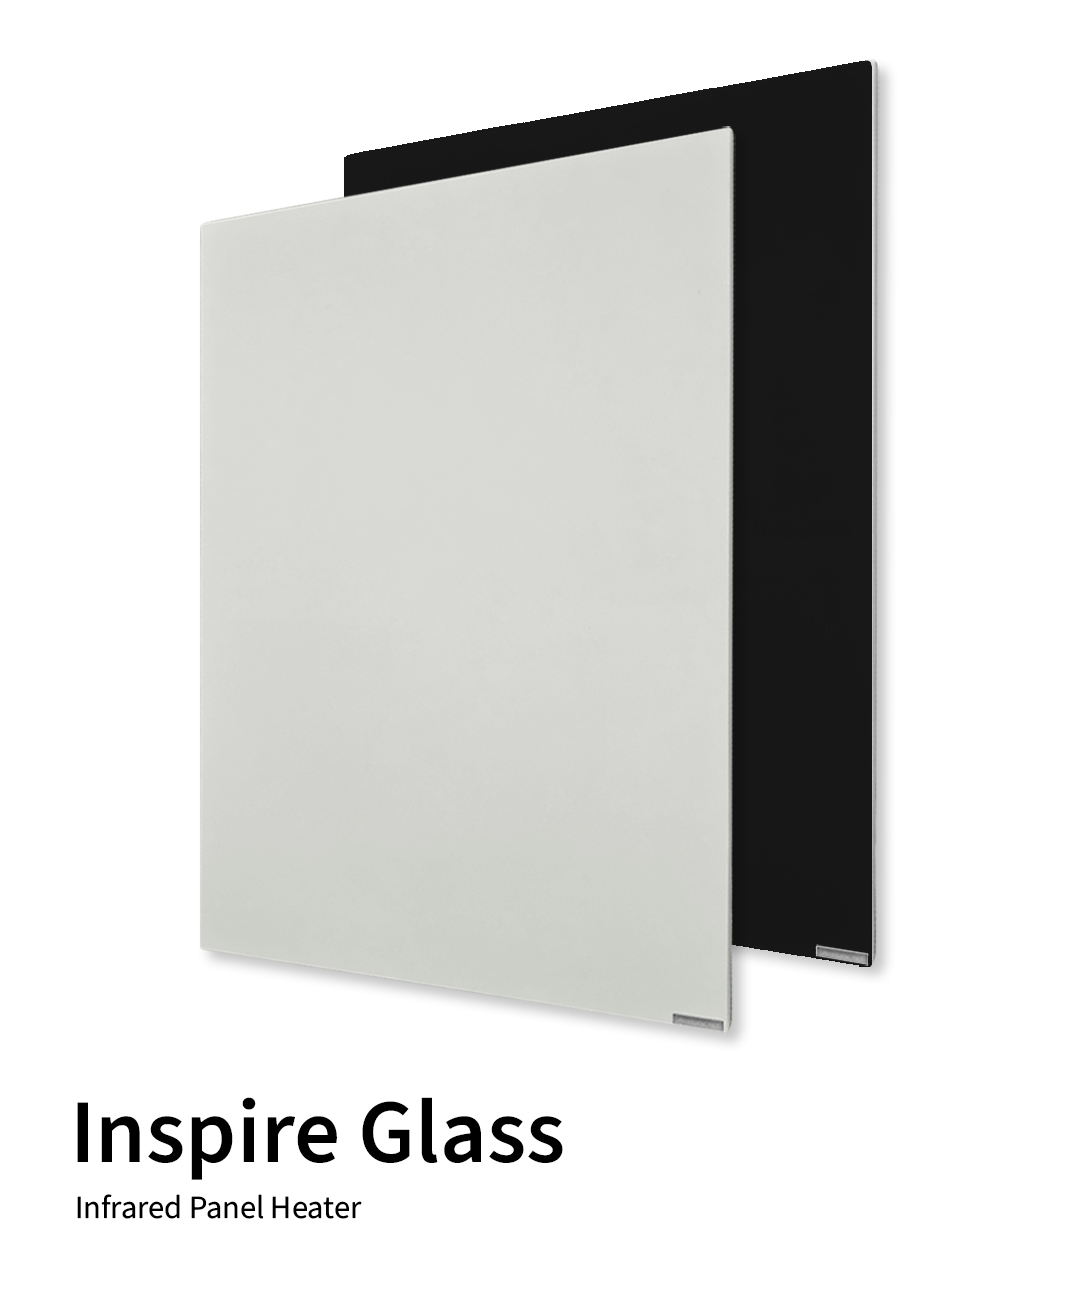 Inspire Glass Infrared Panel Heater